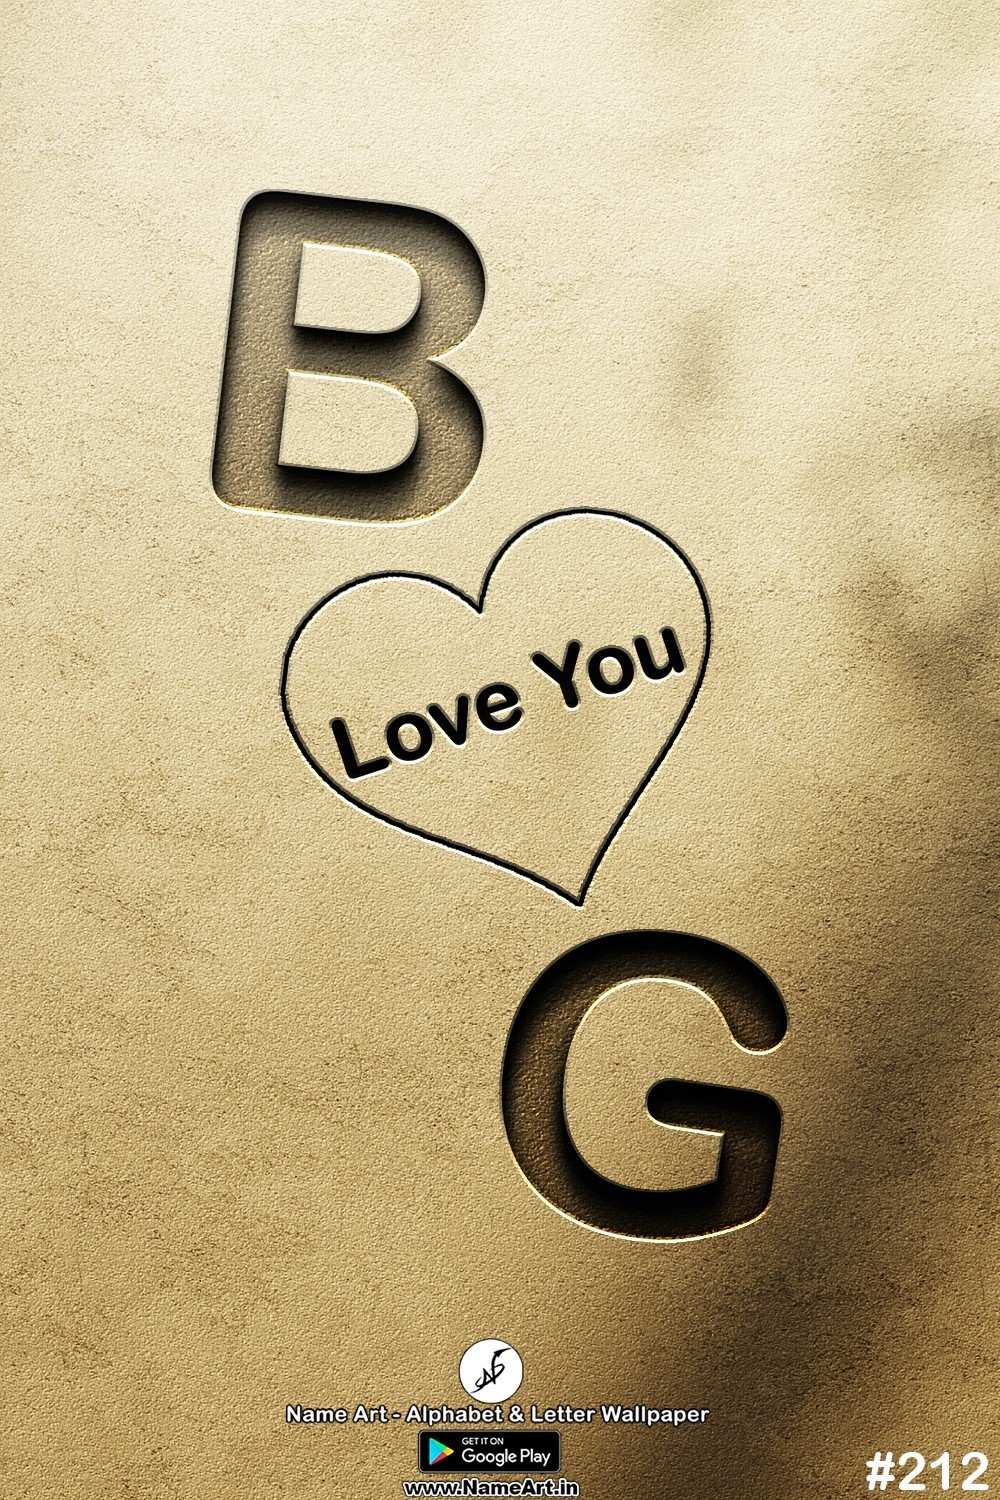 BG | Whatsapp Status DP BG | BG Love Status Cute Couples Whatsapp Status DP !! | New Whatsapp Status DP BG Images |